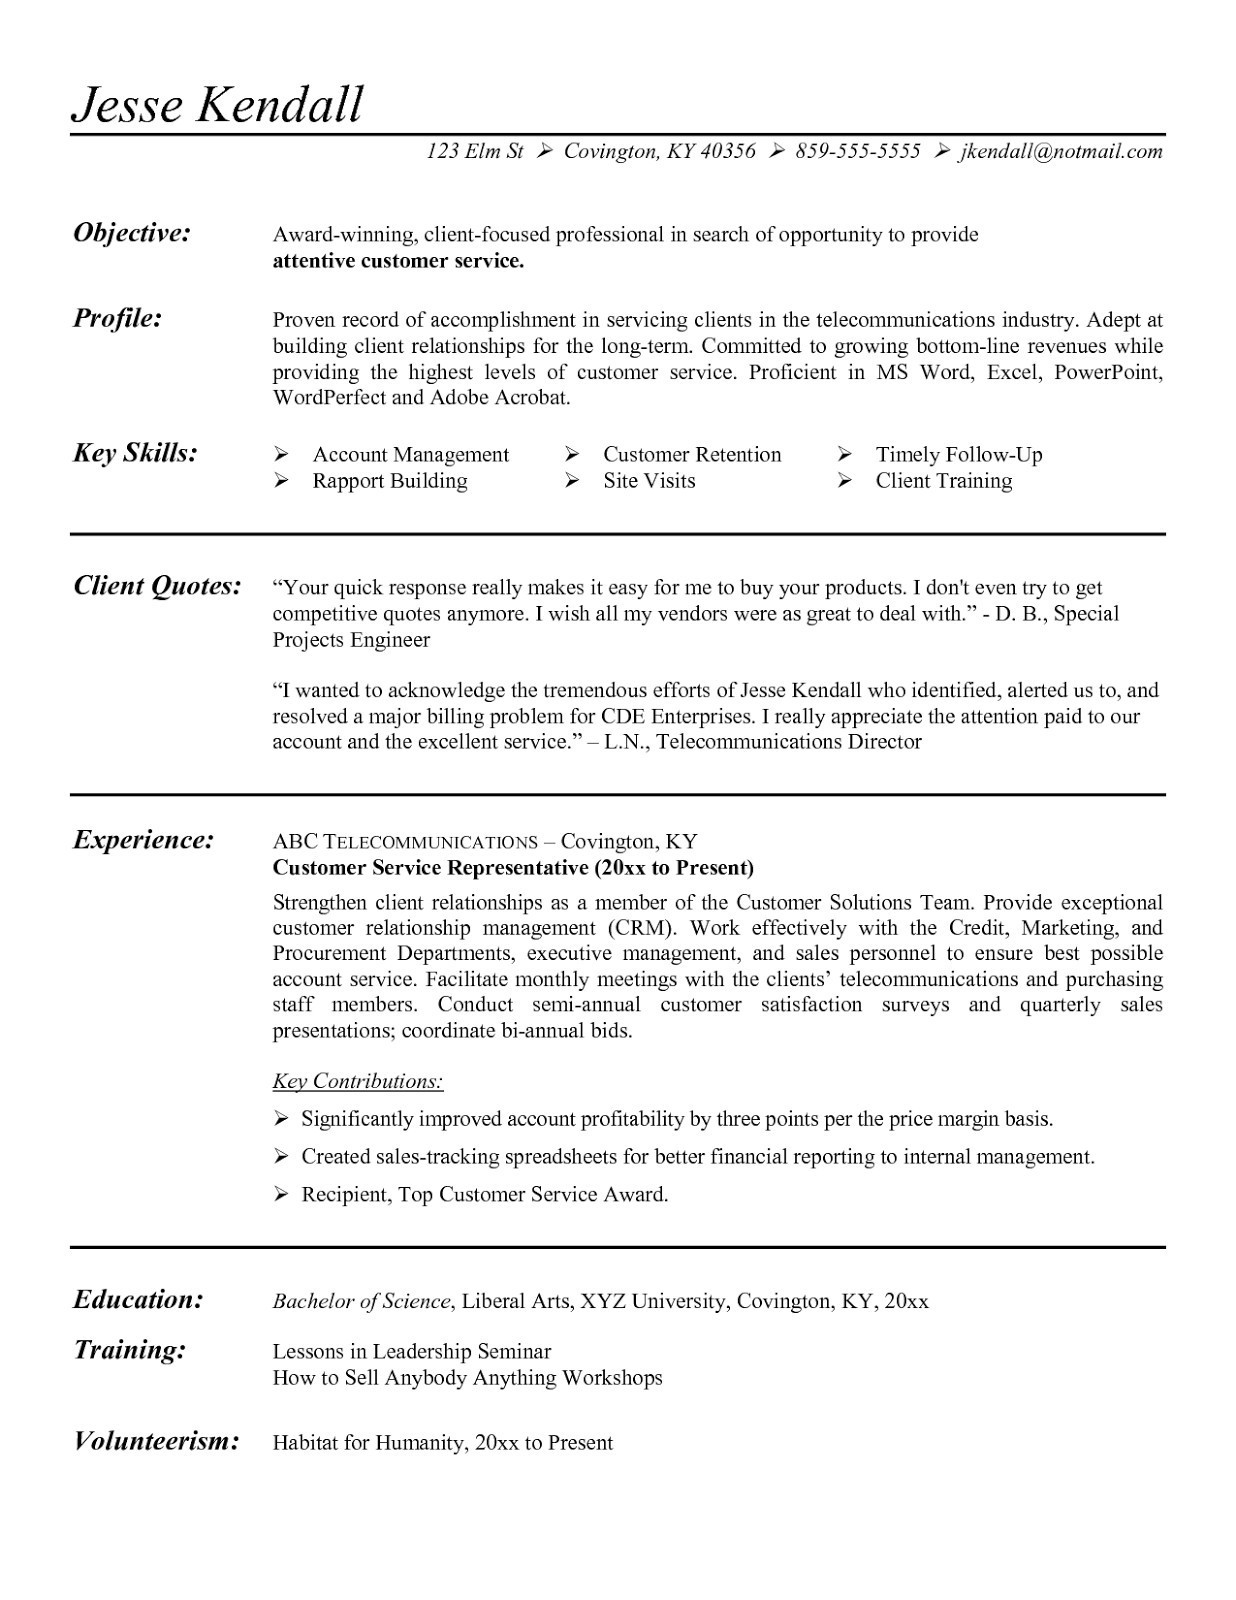 Resume Summary Examples Resume Summary Examples Inspirational Resume Summary Section Fresh